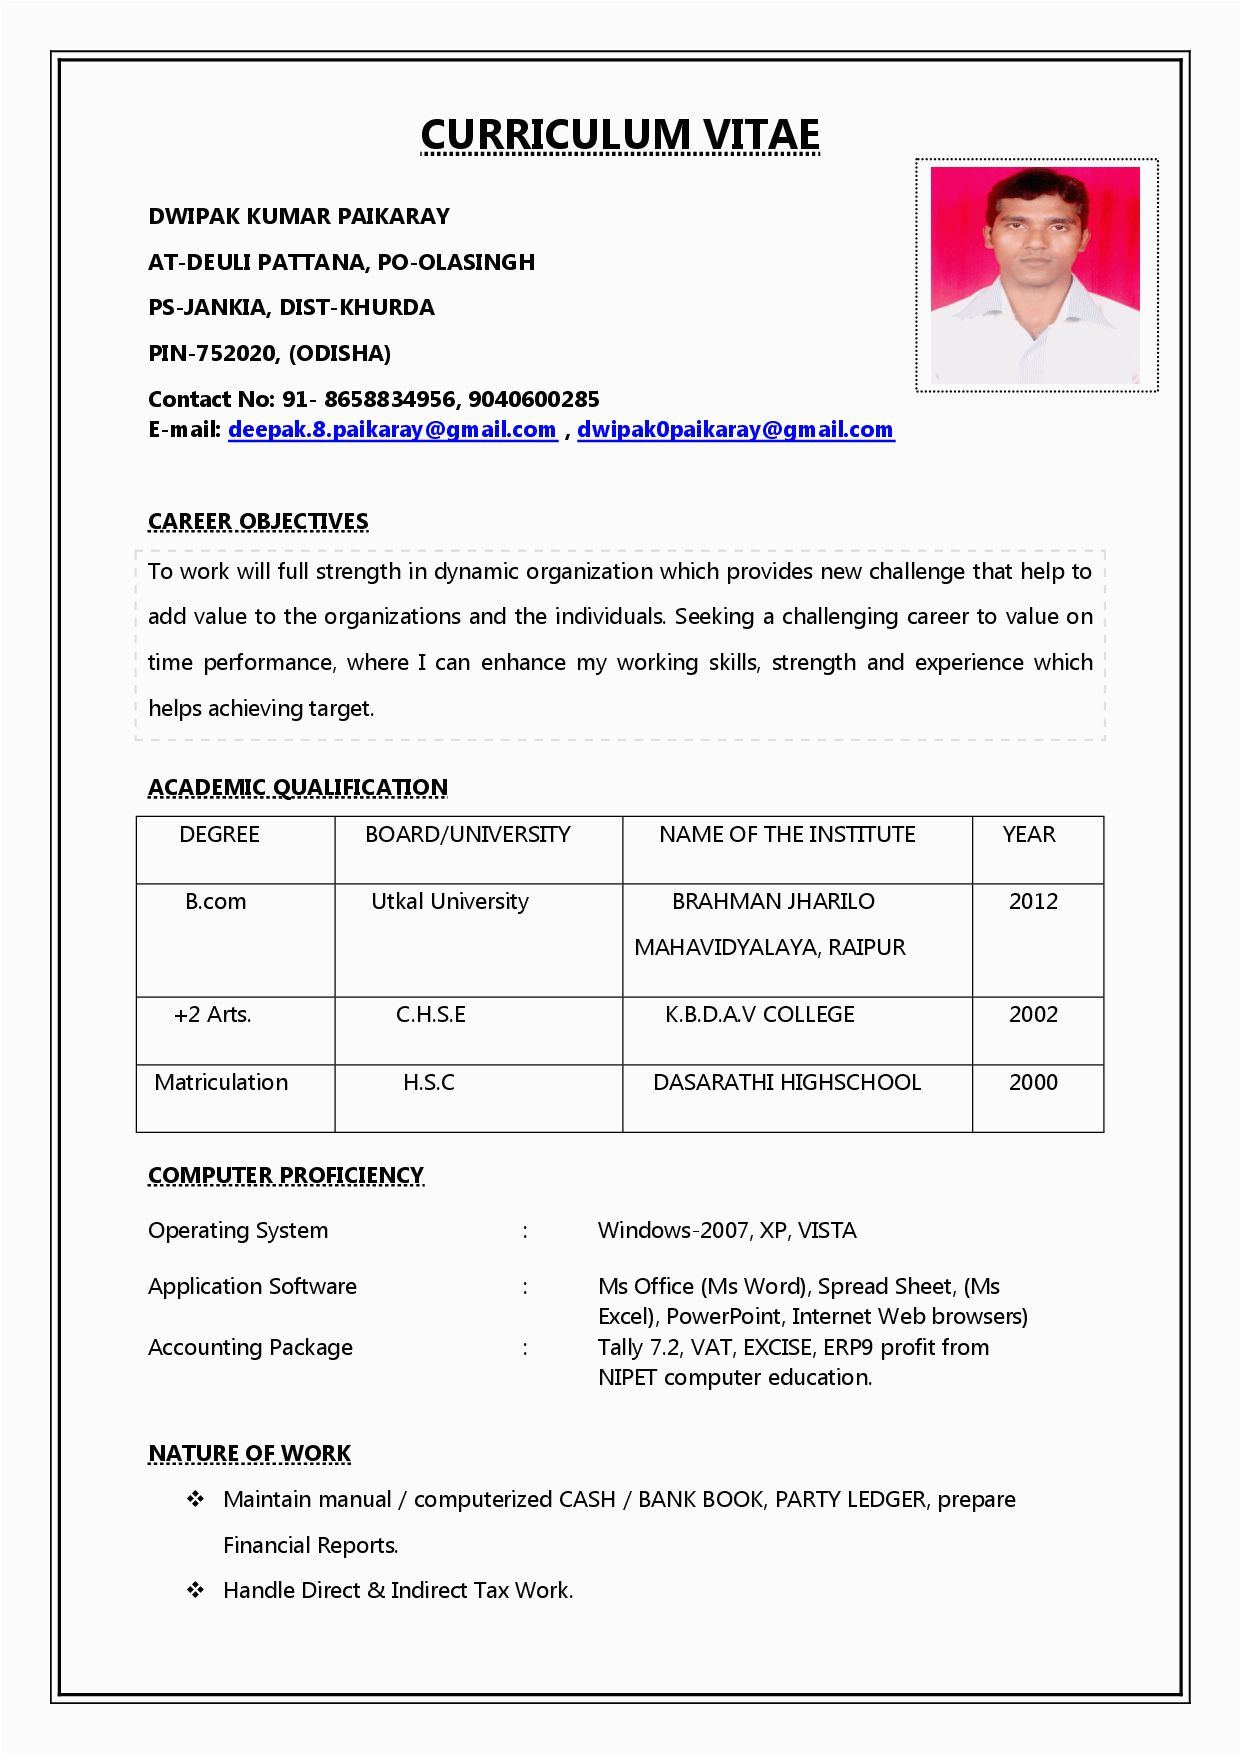 Resume format Sample for Job Application Job Interview Job Application Professional Resume format